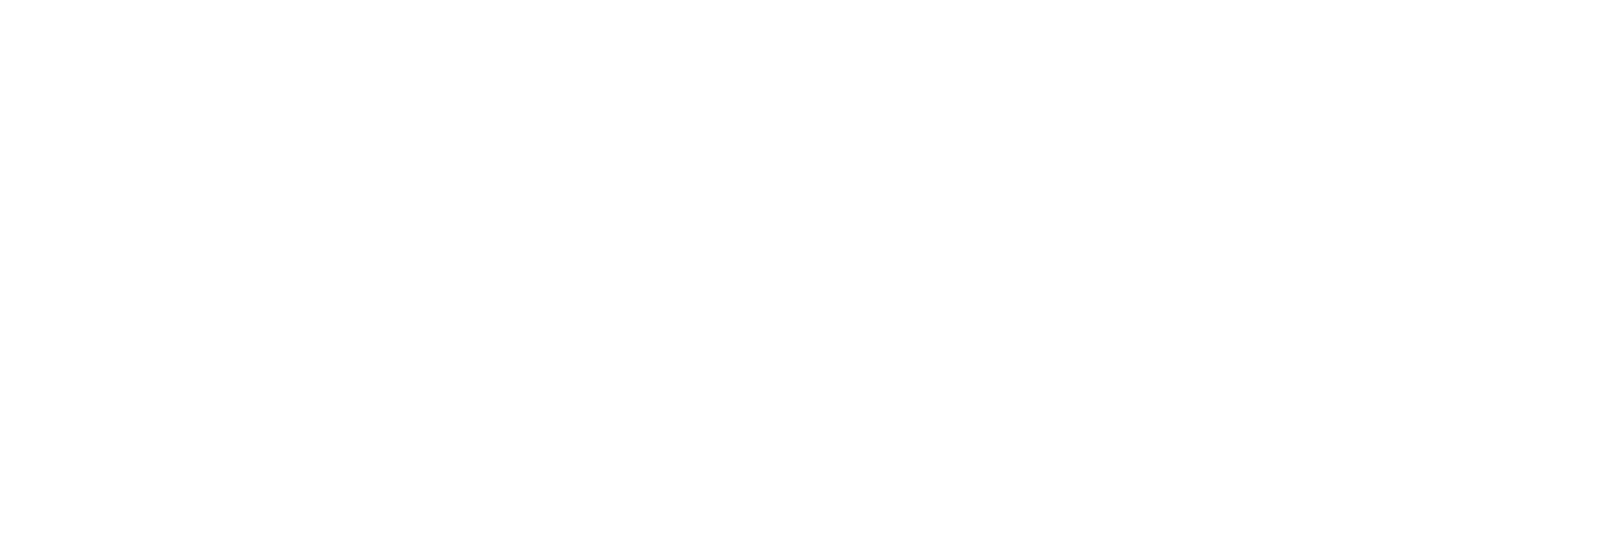 windata GmbH & Co.KG